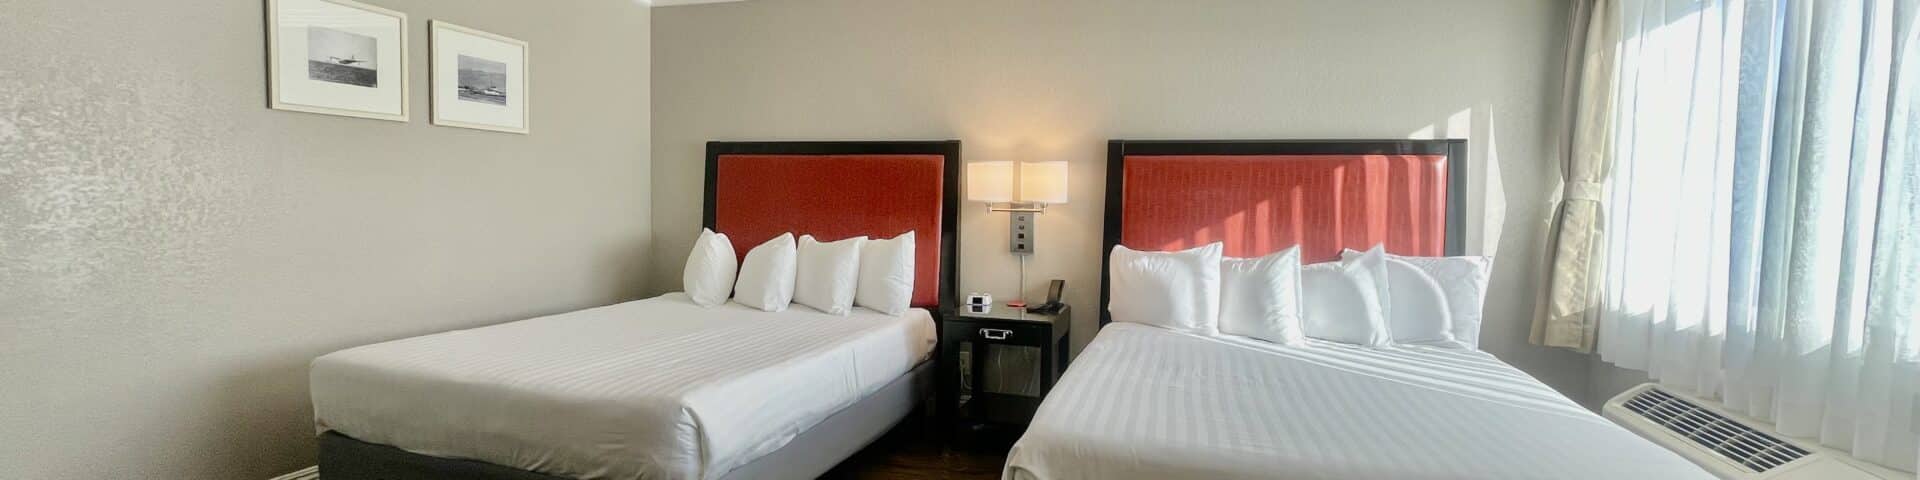 Inn At Highway 1 - Two Queen Bed Deluxe Room